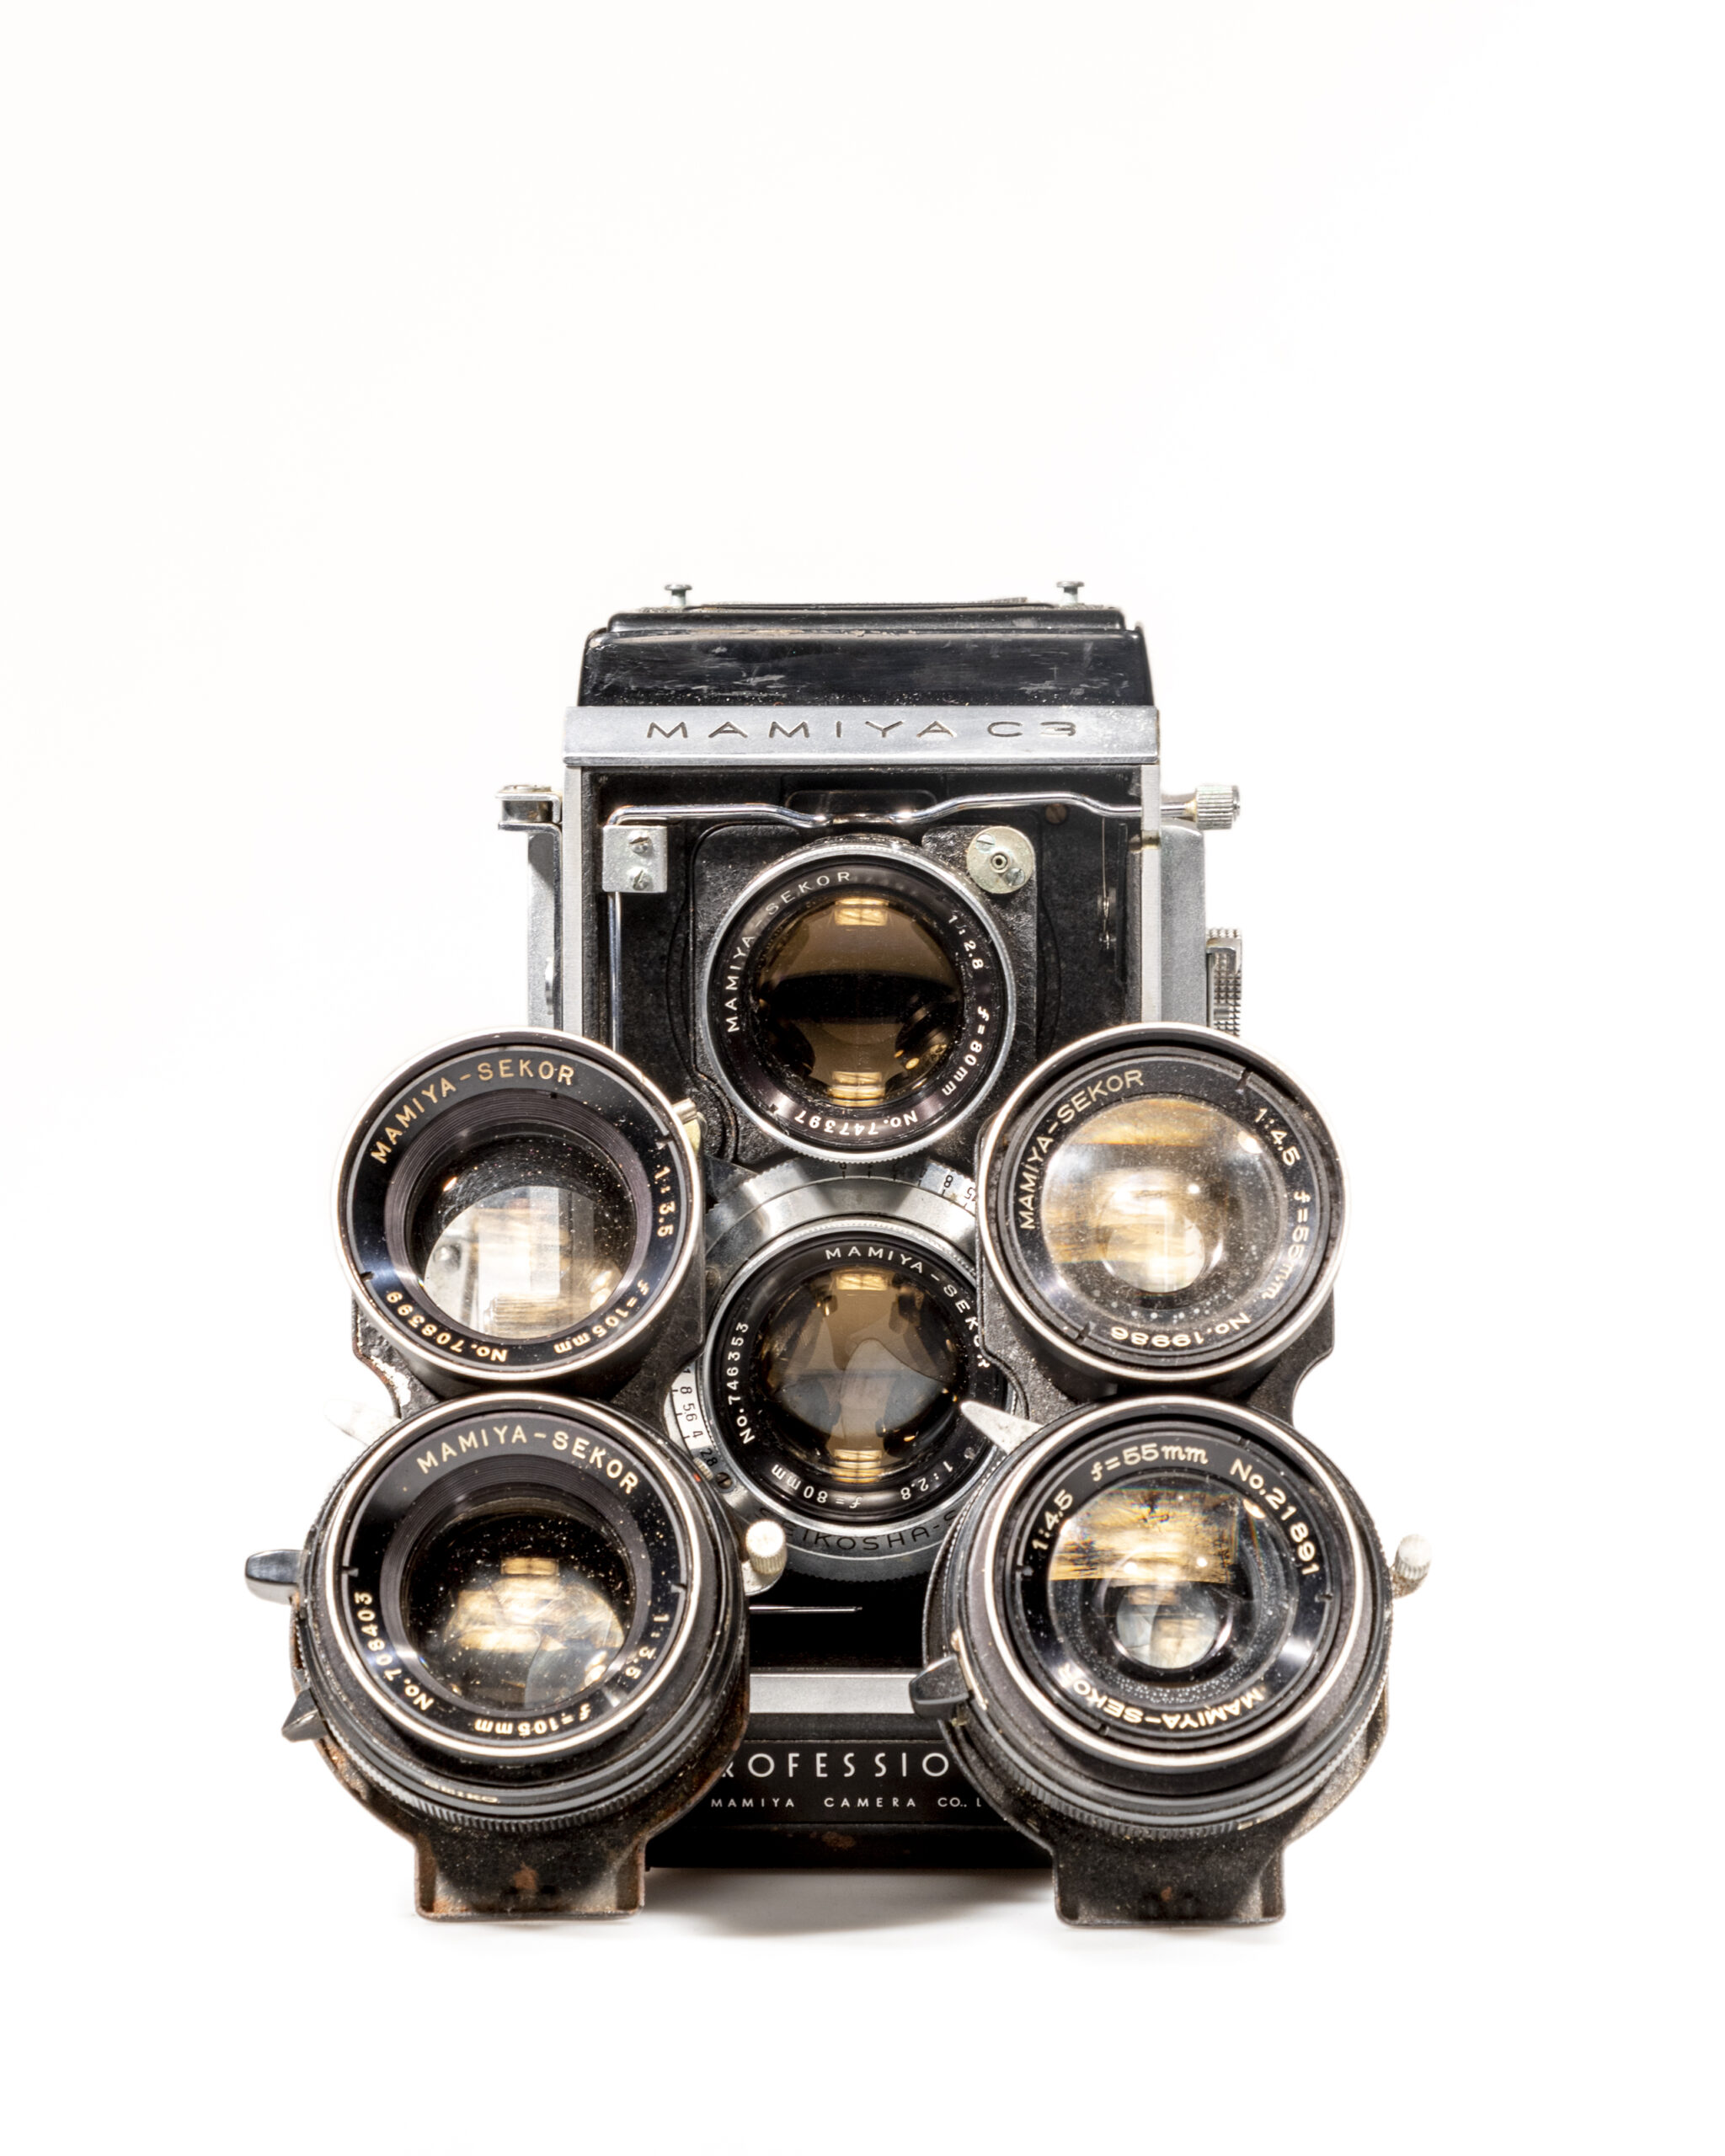 Six lenses of the Mamiya c3 twin lens reflex camera